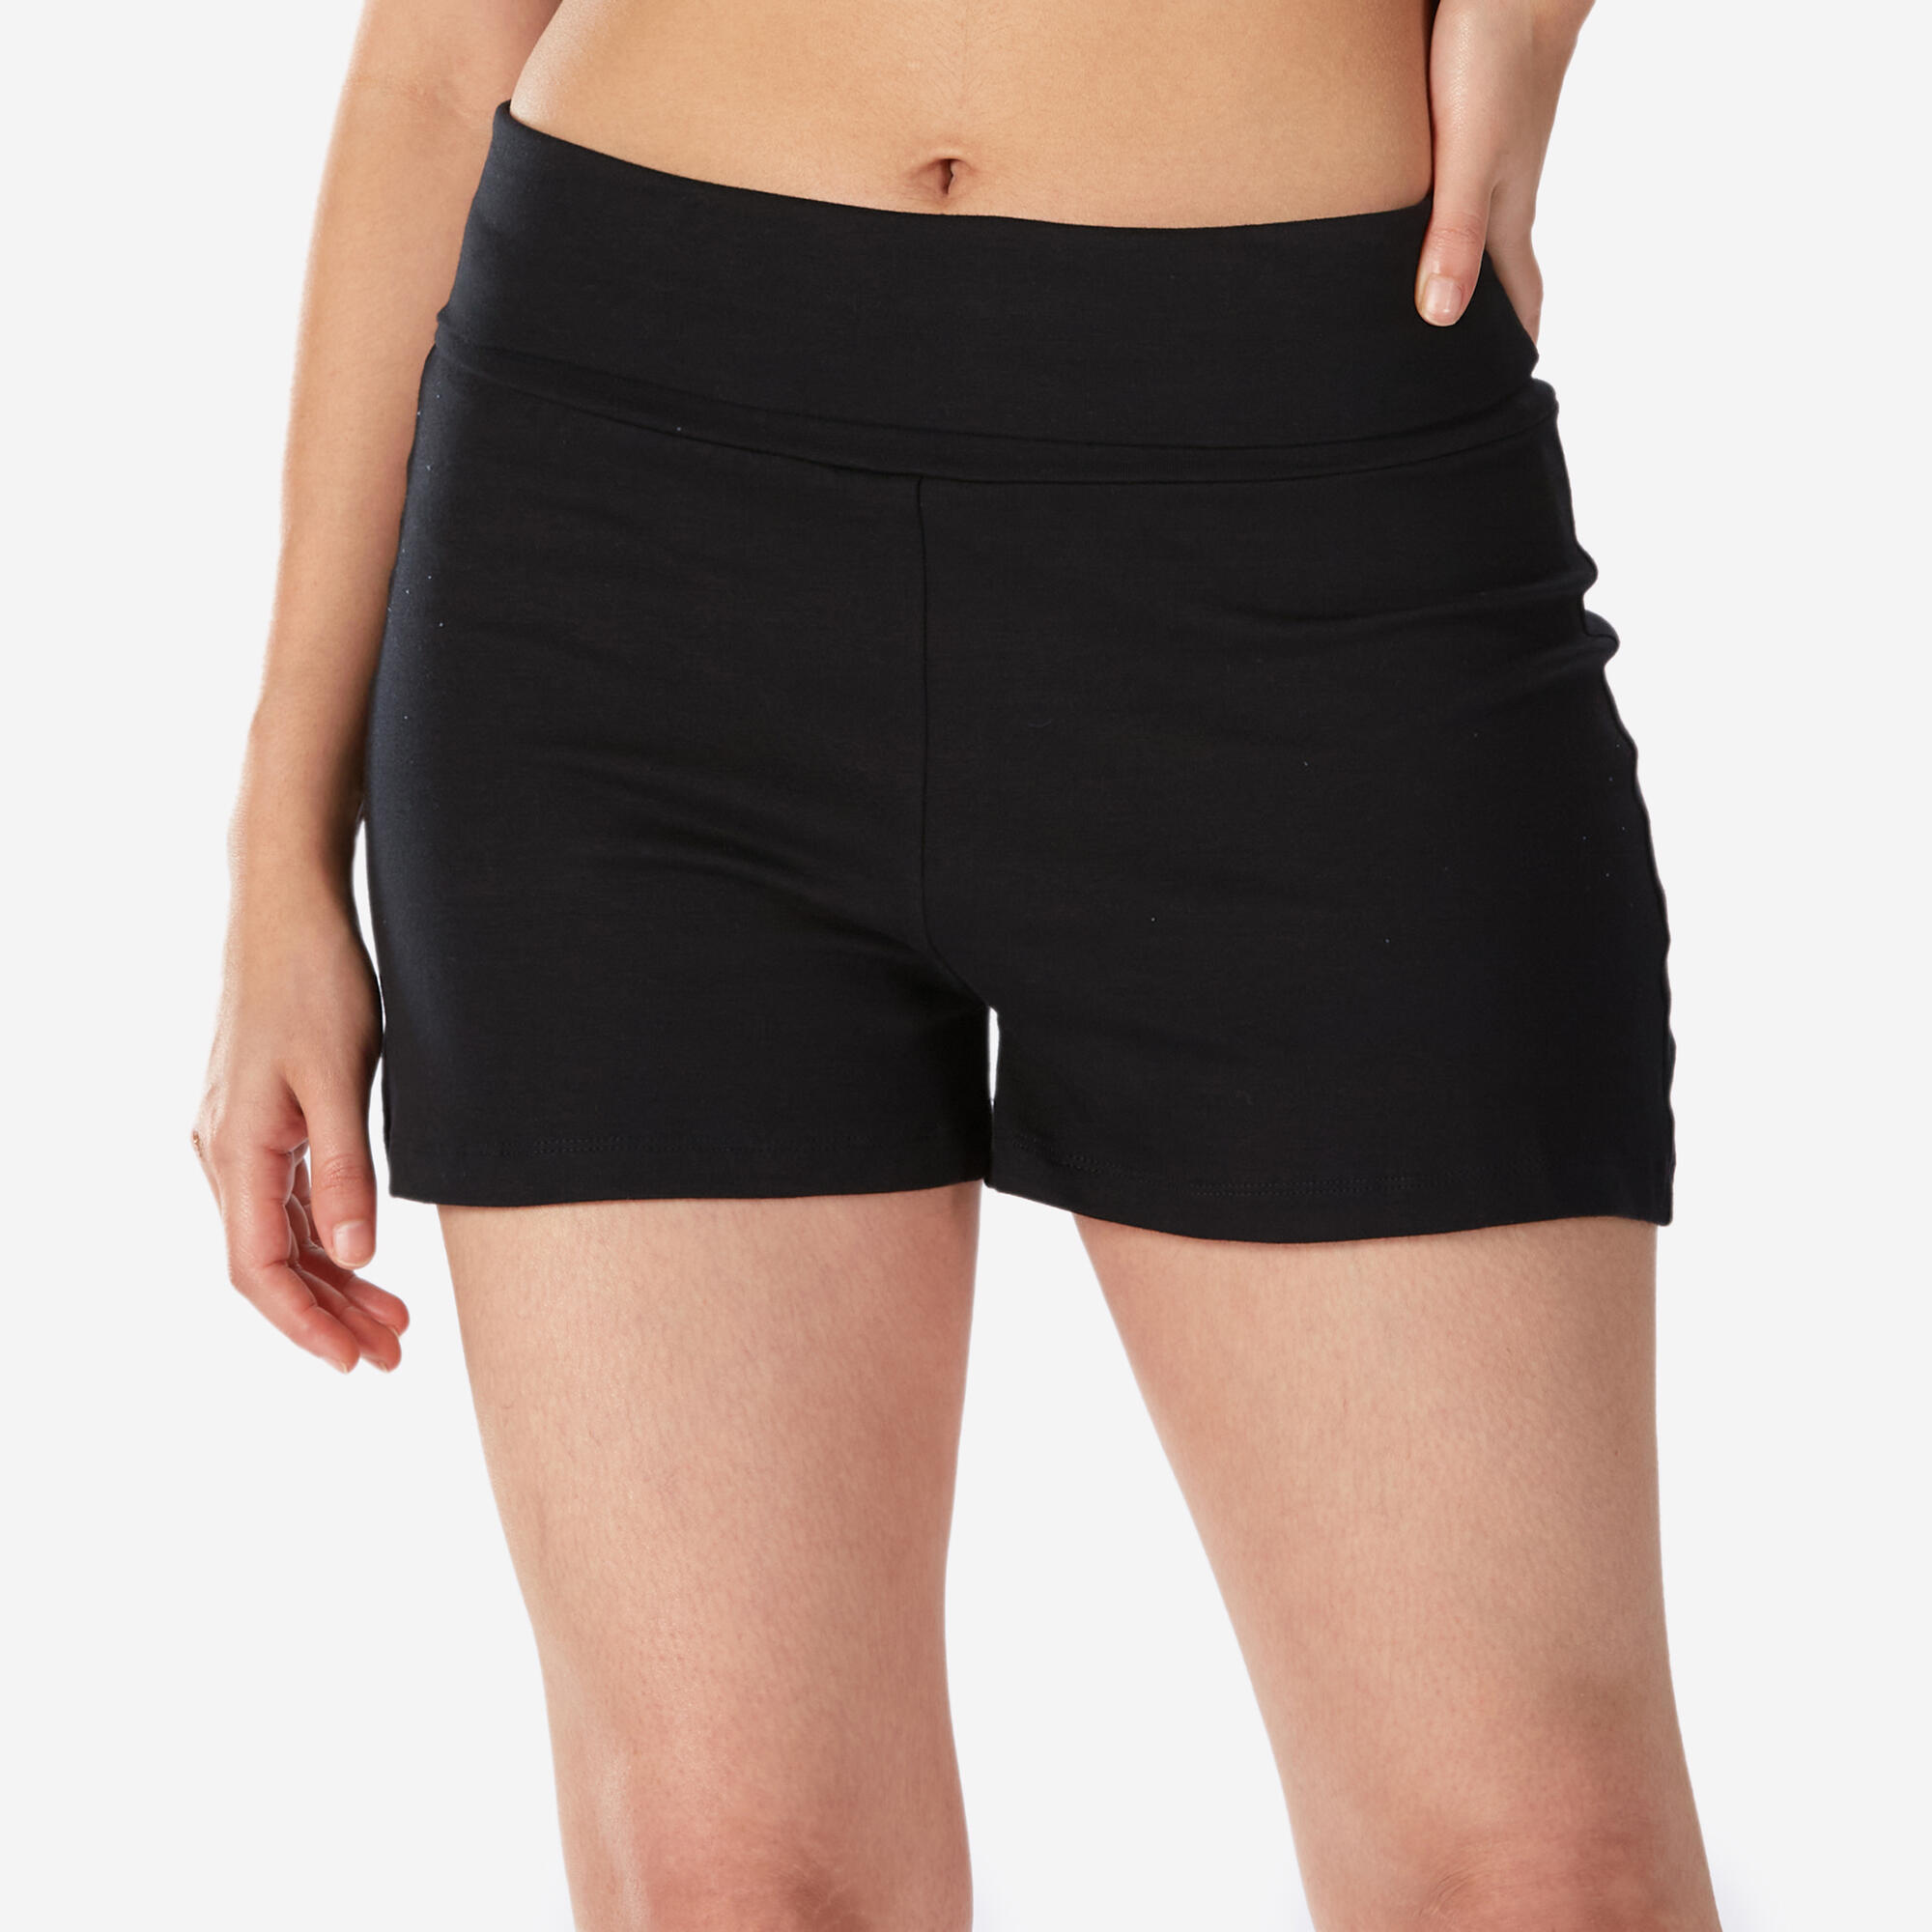 Yoga Shorts - Black/Mottled Grey, Yoga Pants for Women